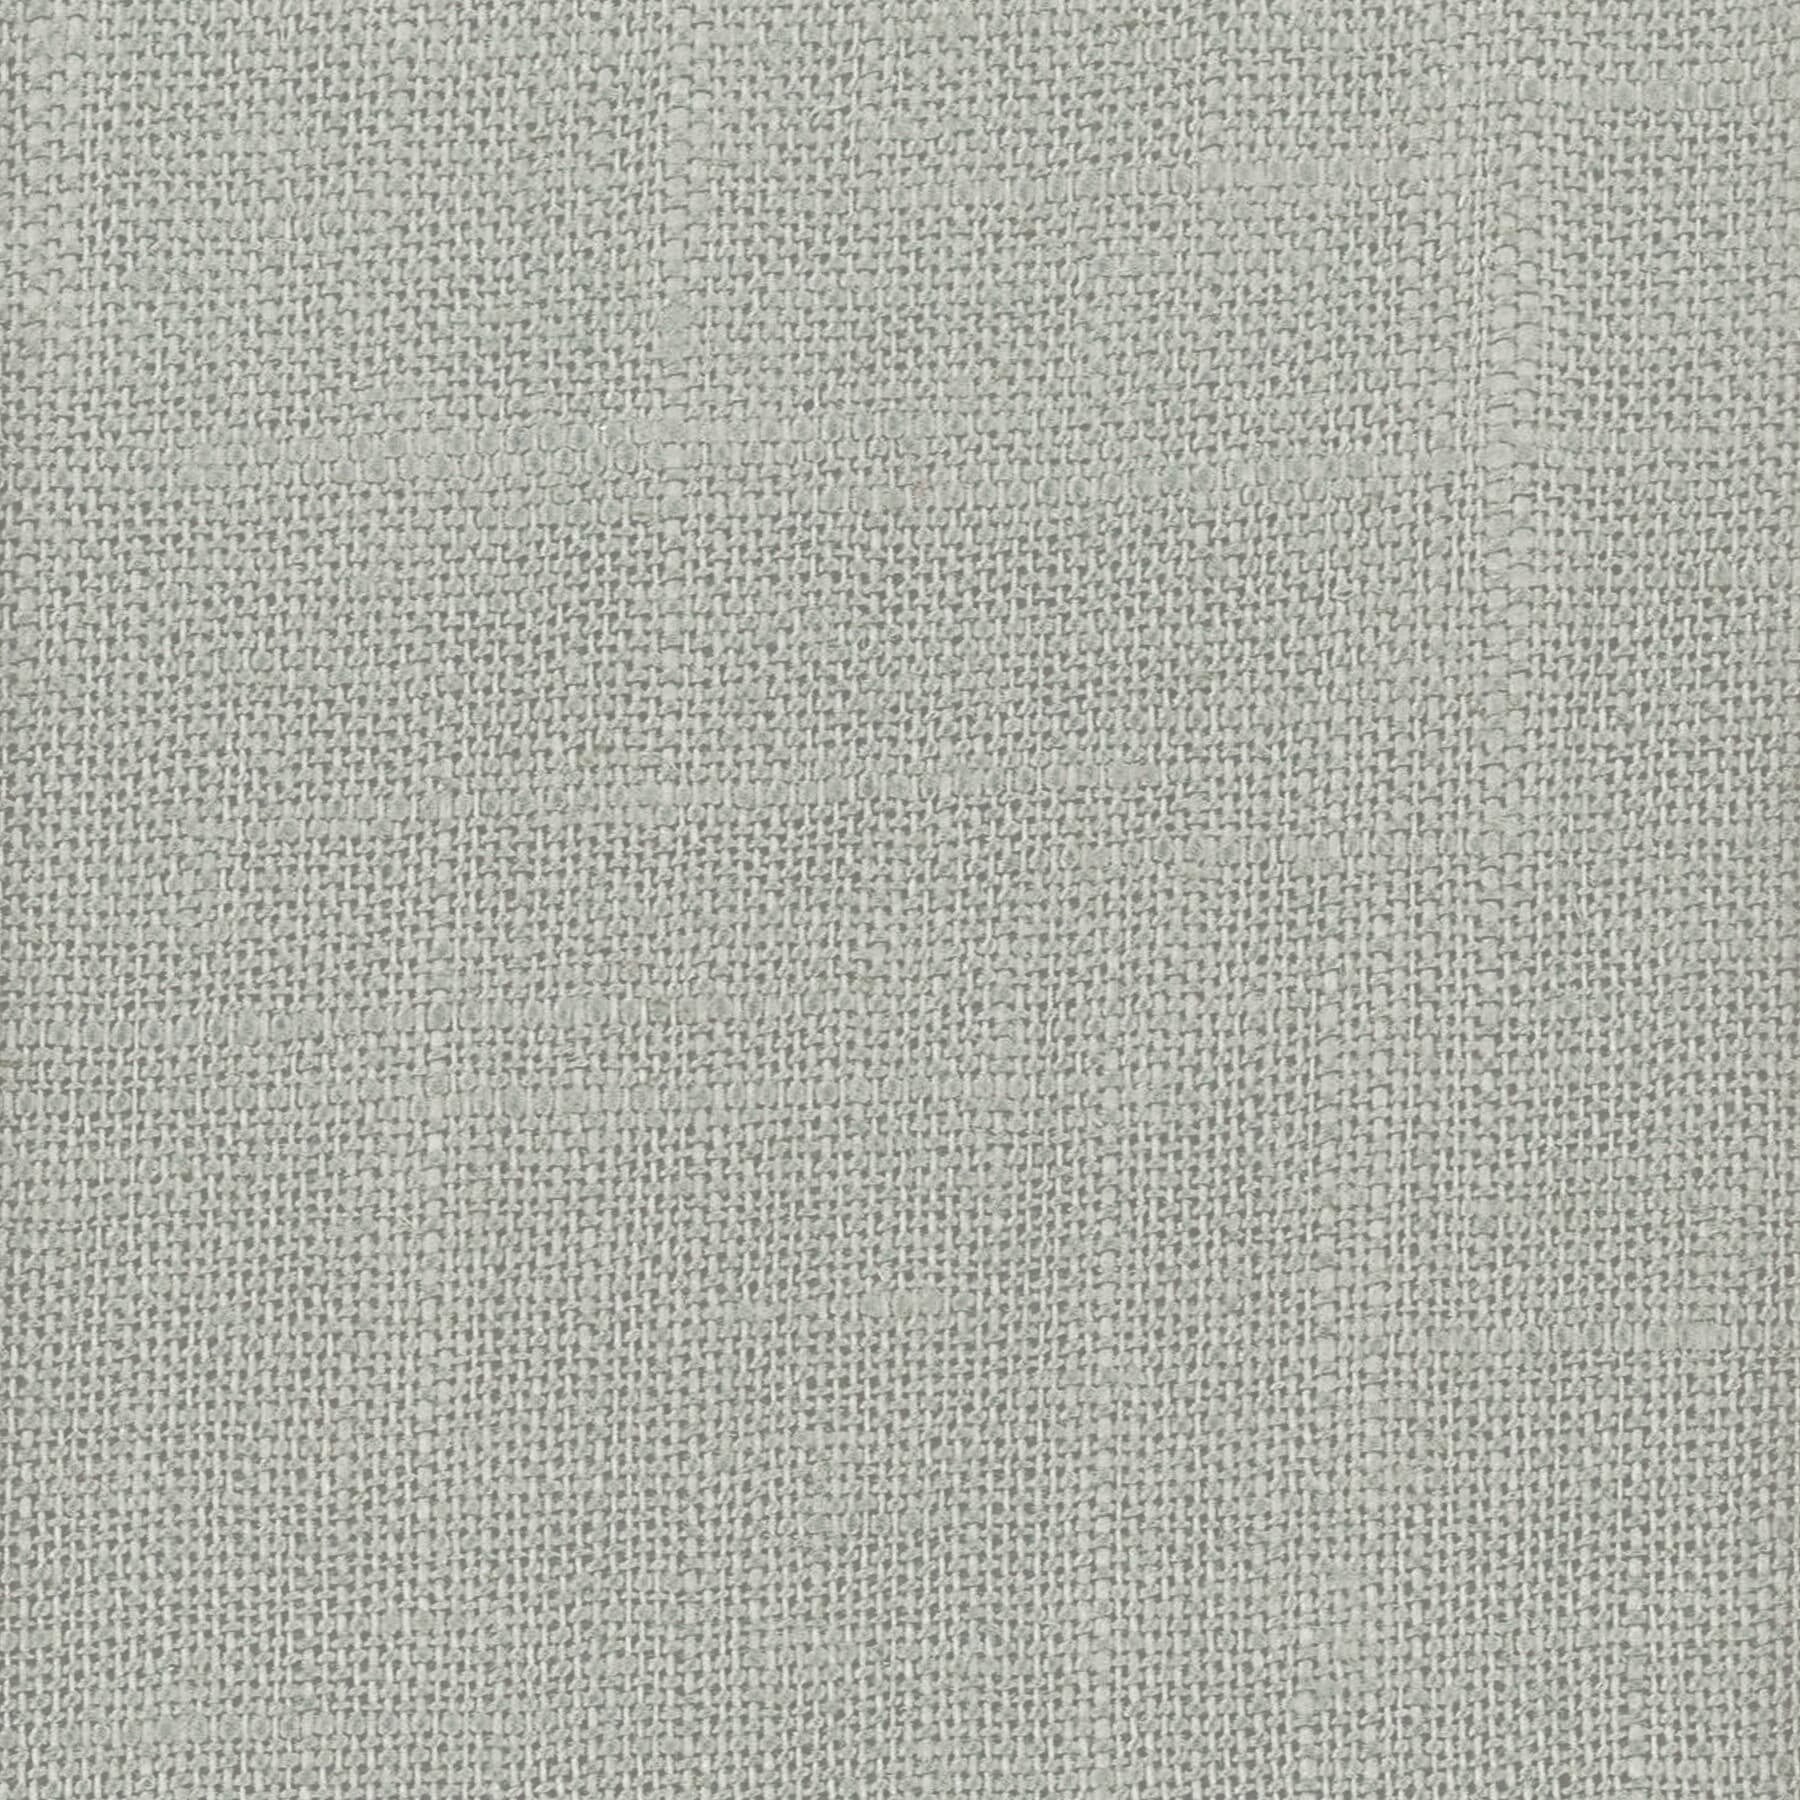 Ticonderoga 65 Grey by Stout Fabric